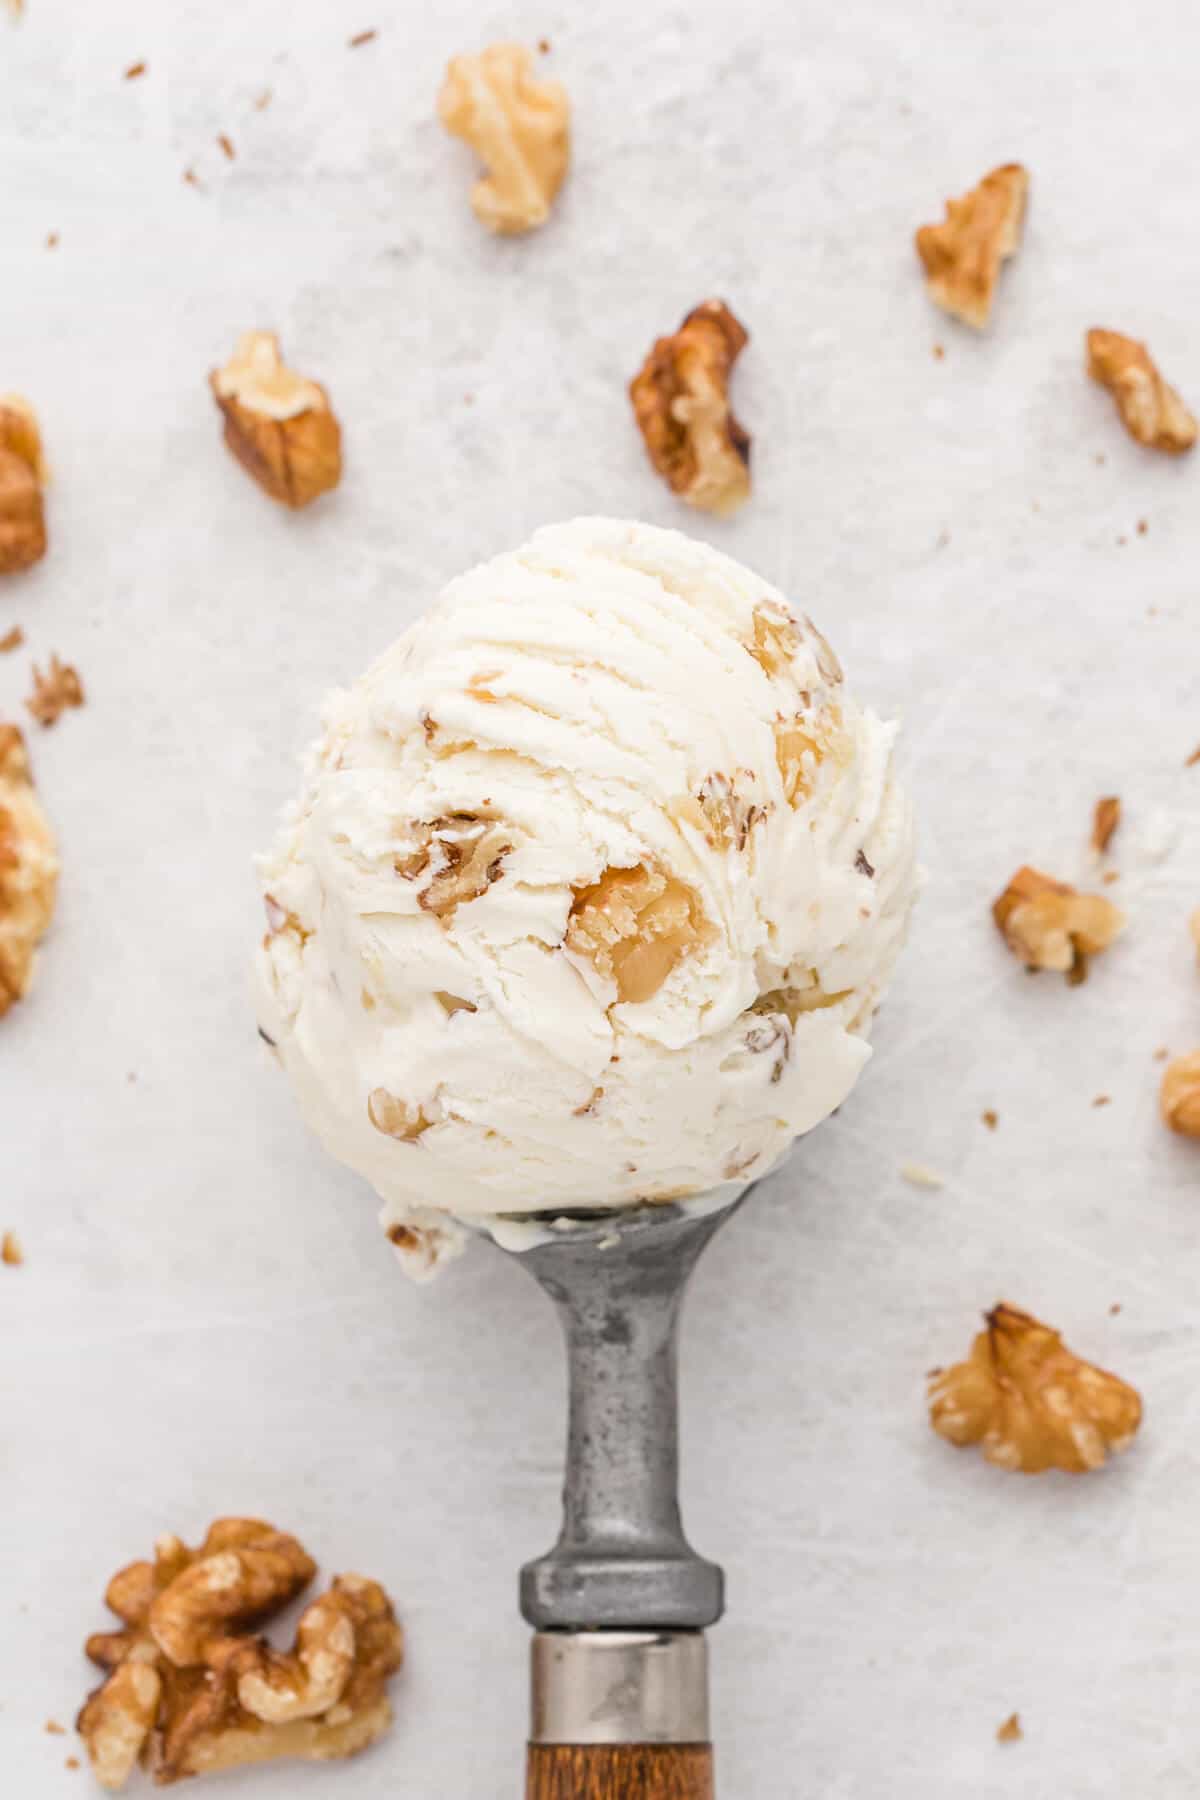 Maple walnut ice cream in an ice cream scoop.